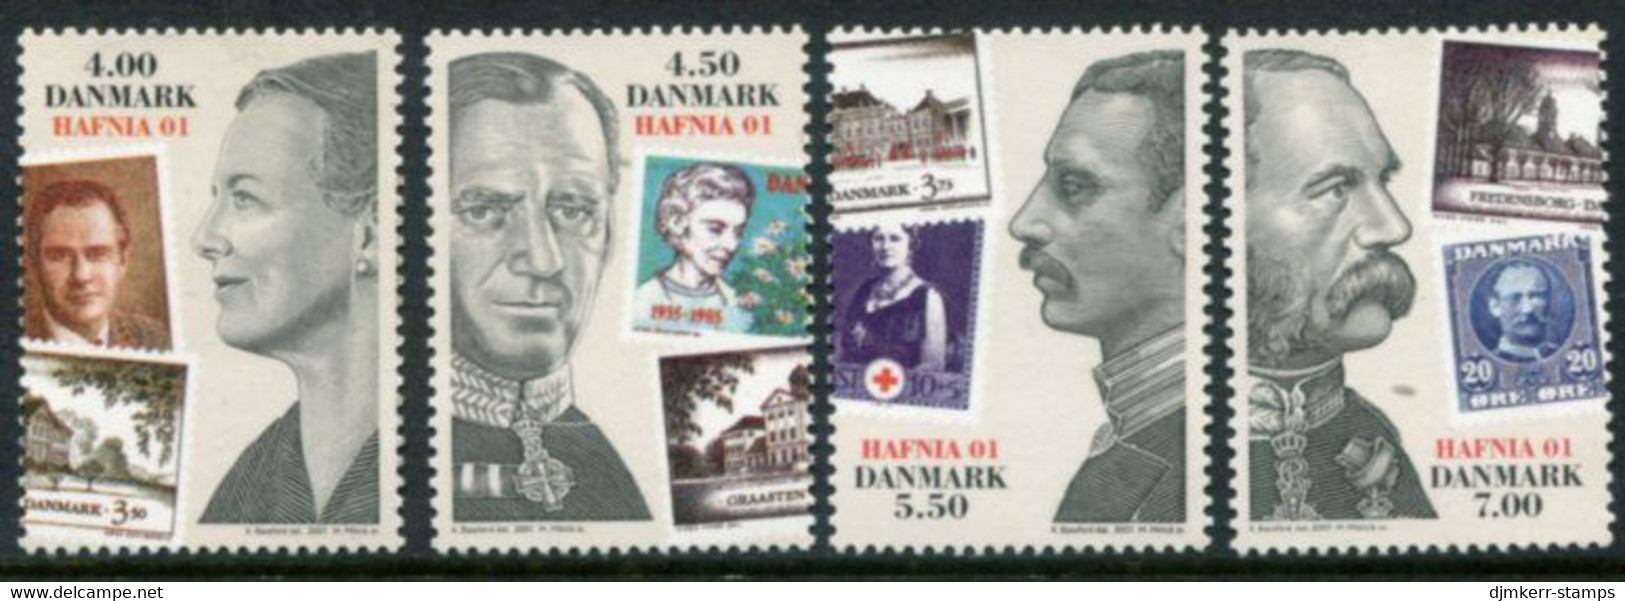 DENMARK 2001 HAFNIA'01 Stamp Exhibition MNH / **.. Michel 1287-90 - Unused Stamps